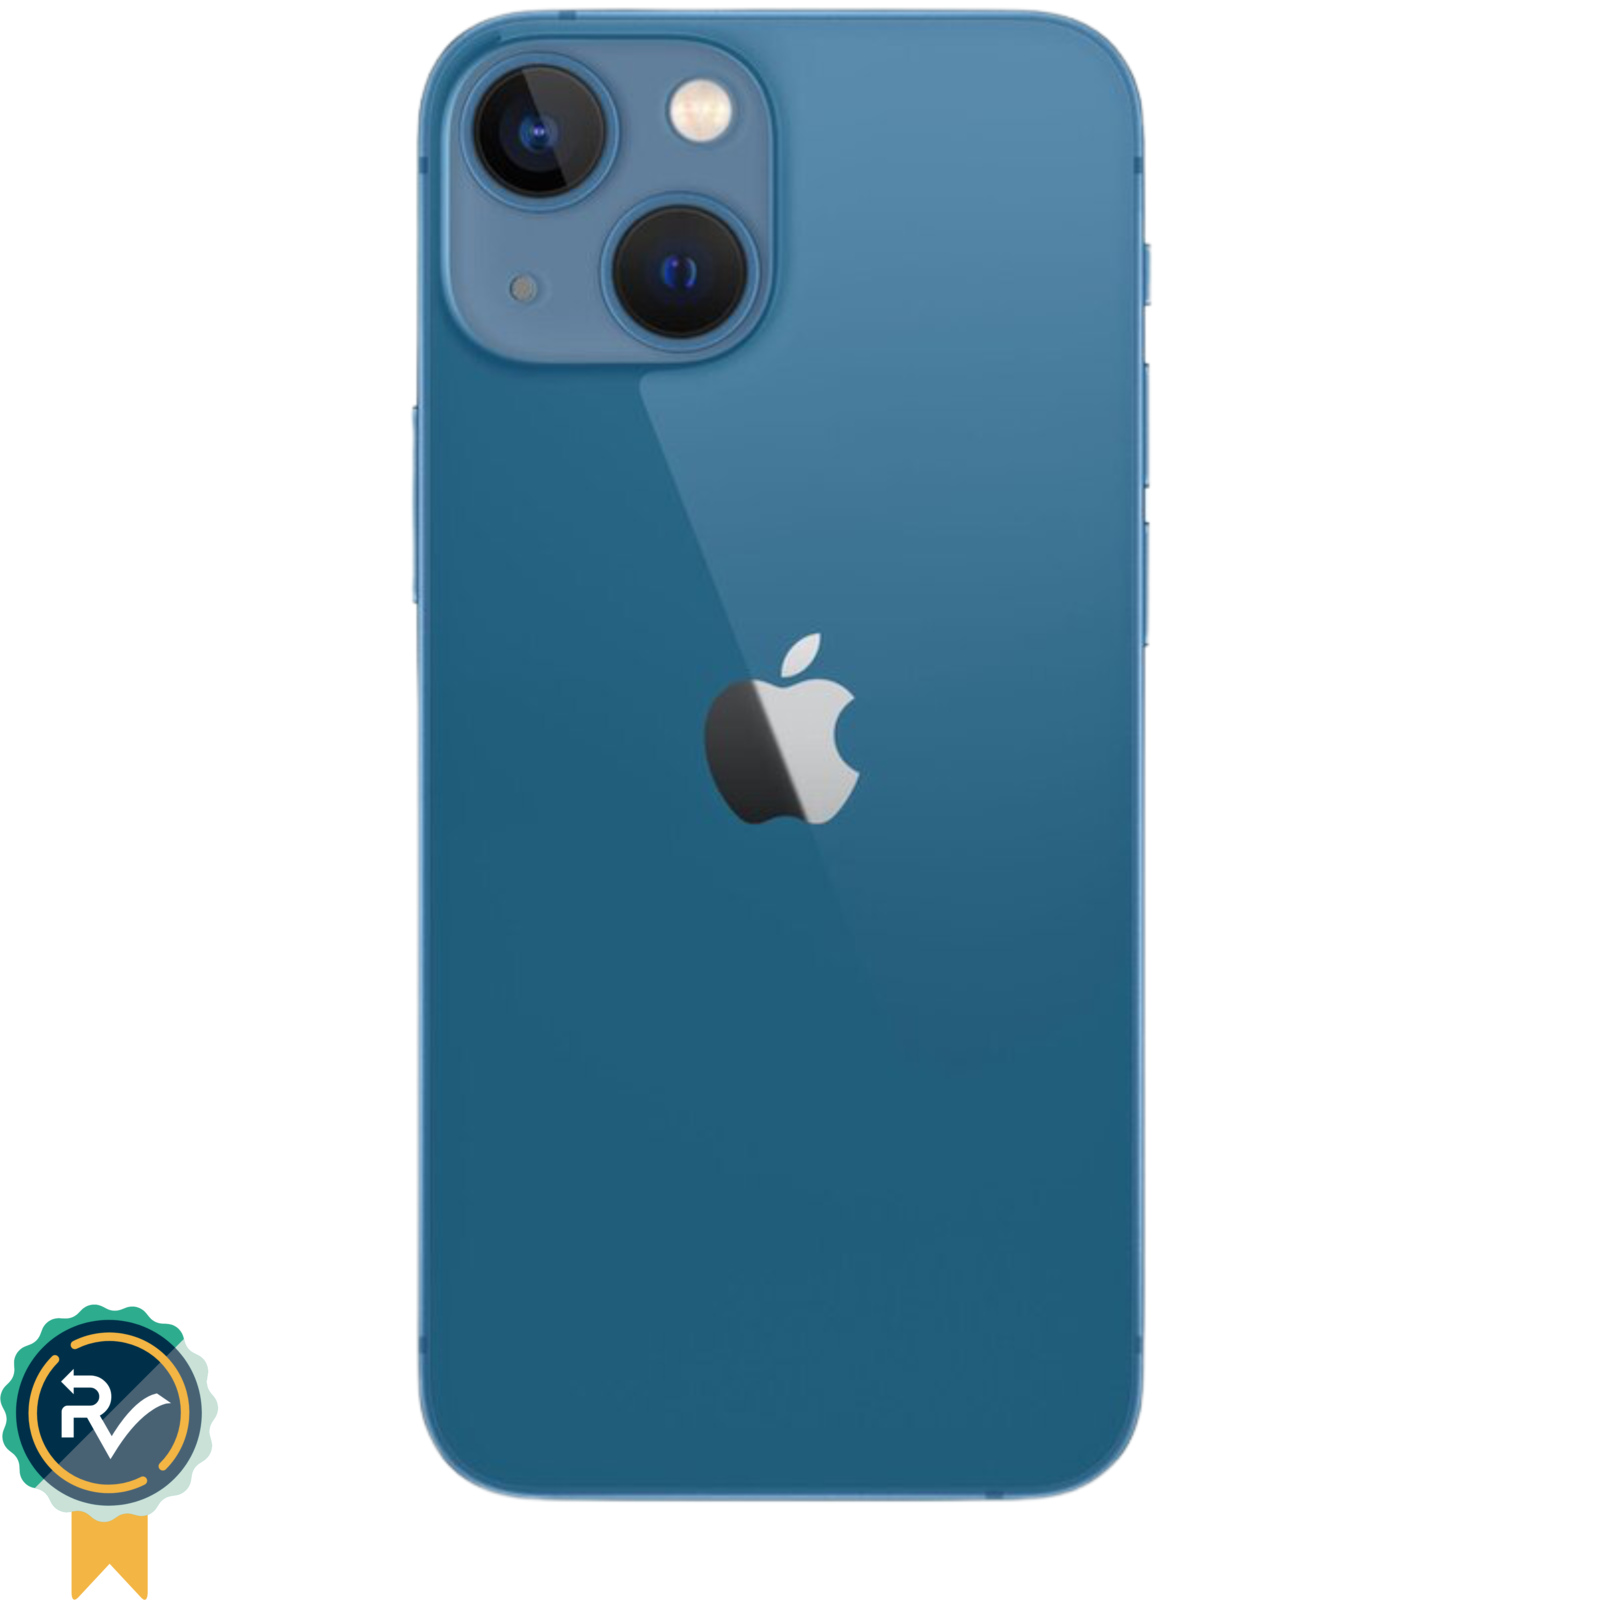 Apple iPhone 13 mini 128GB Blauw